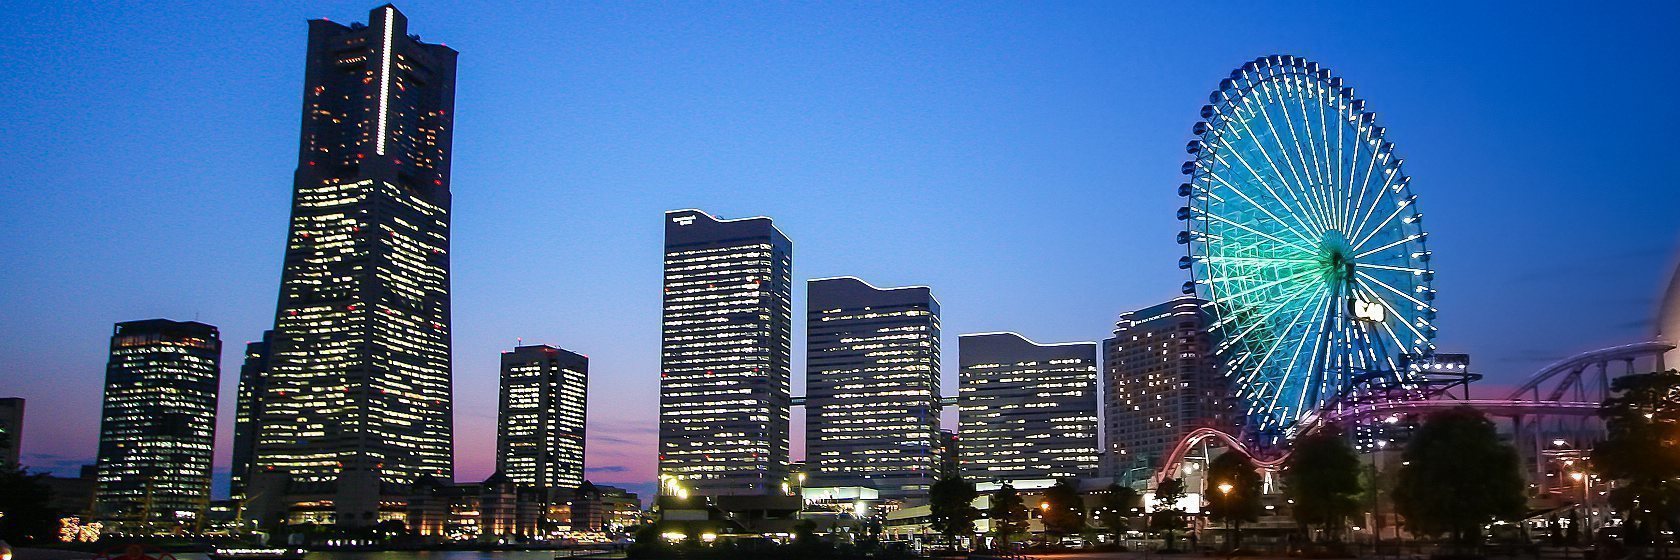 Yokohama Travel Guide - What to do in Yokohama City